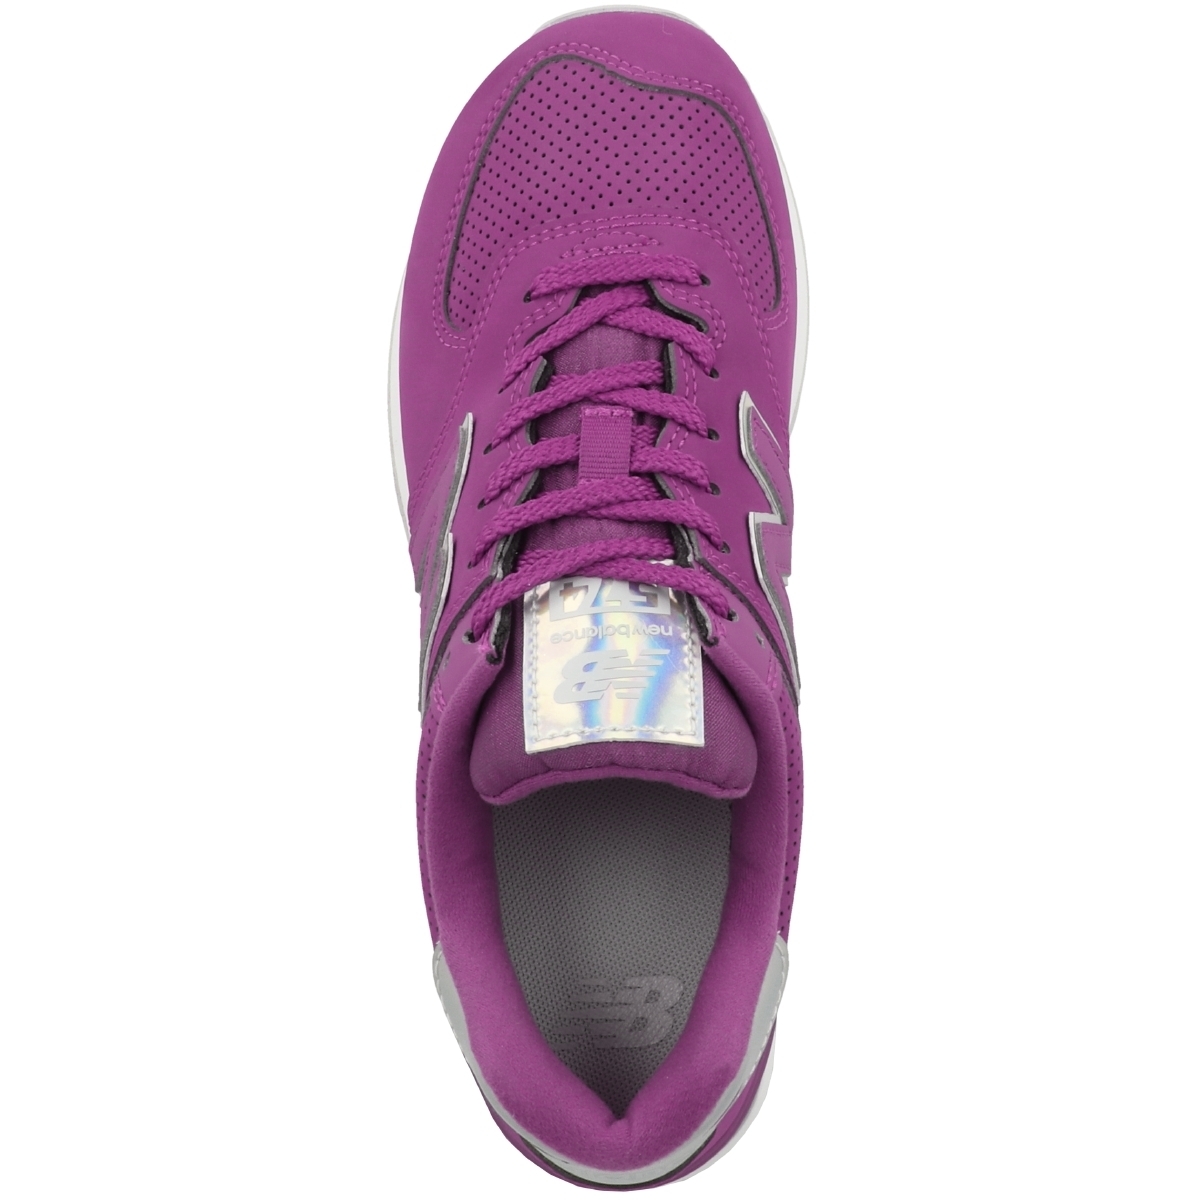 New Balance WL 574 Sneaker low pink